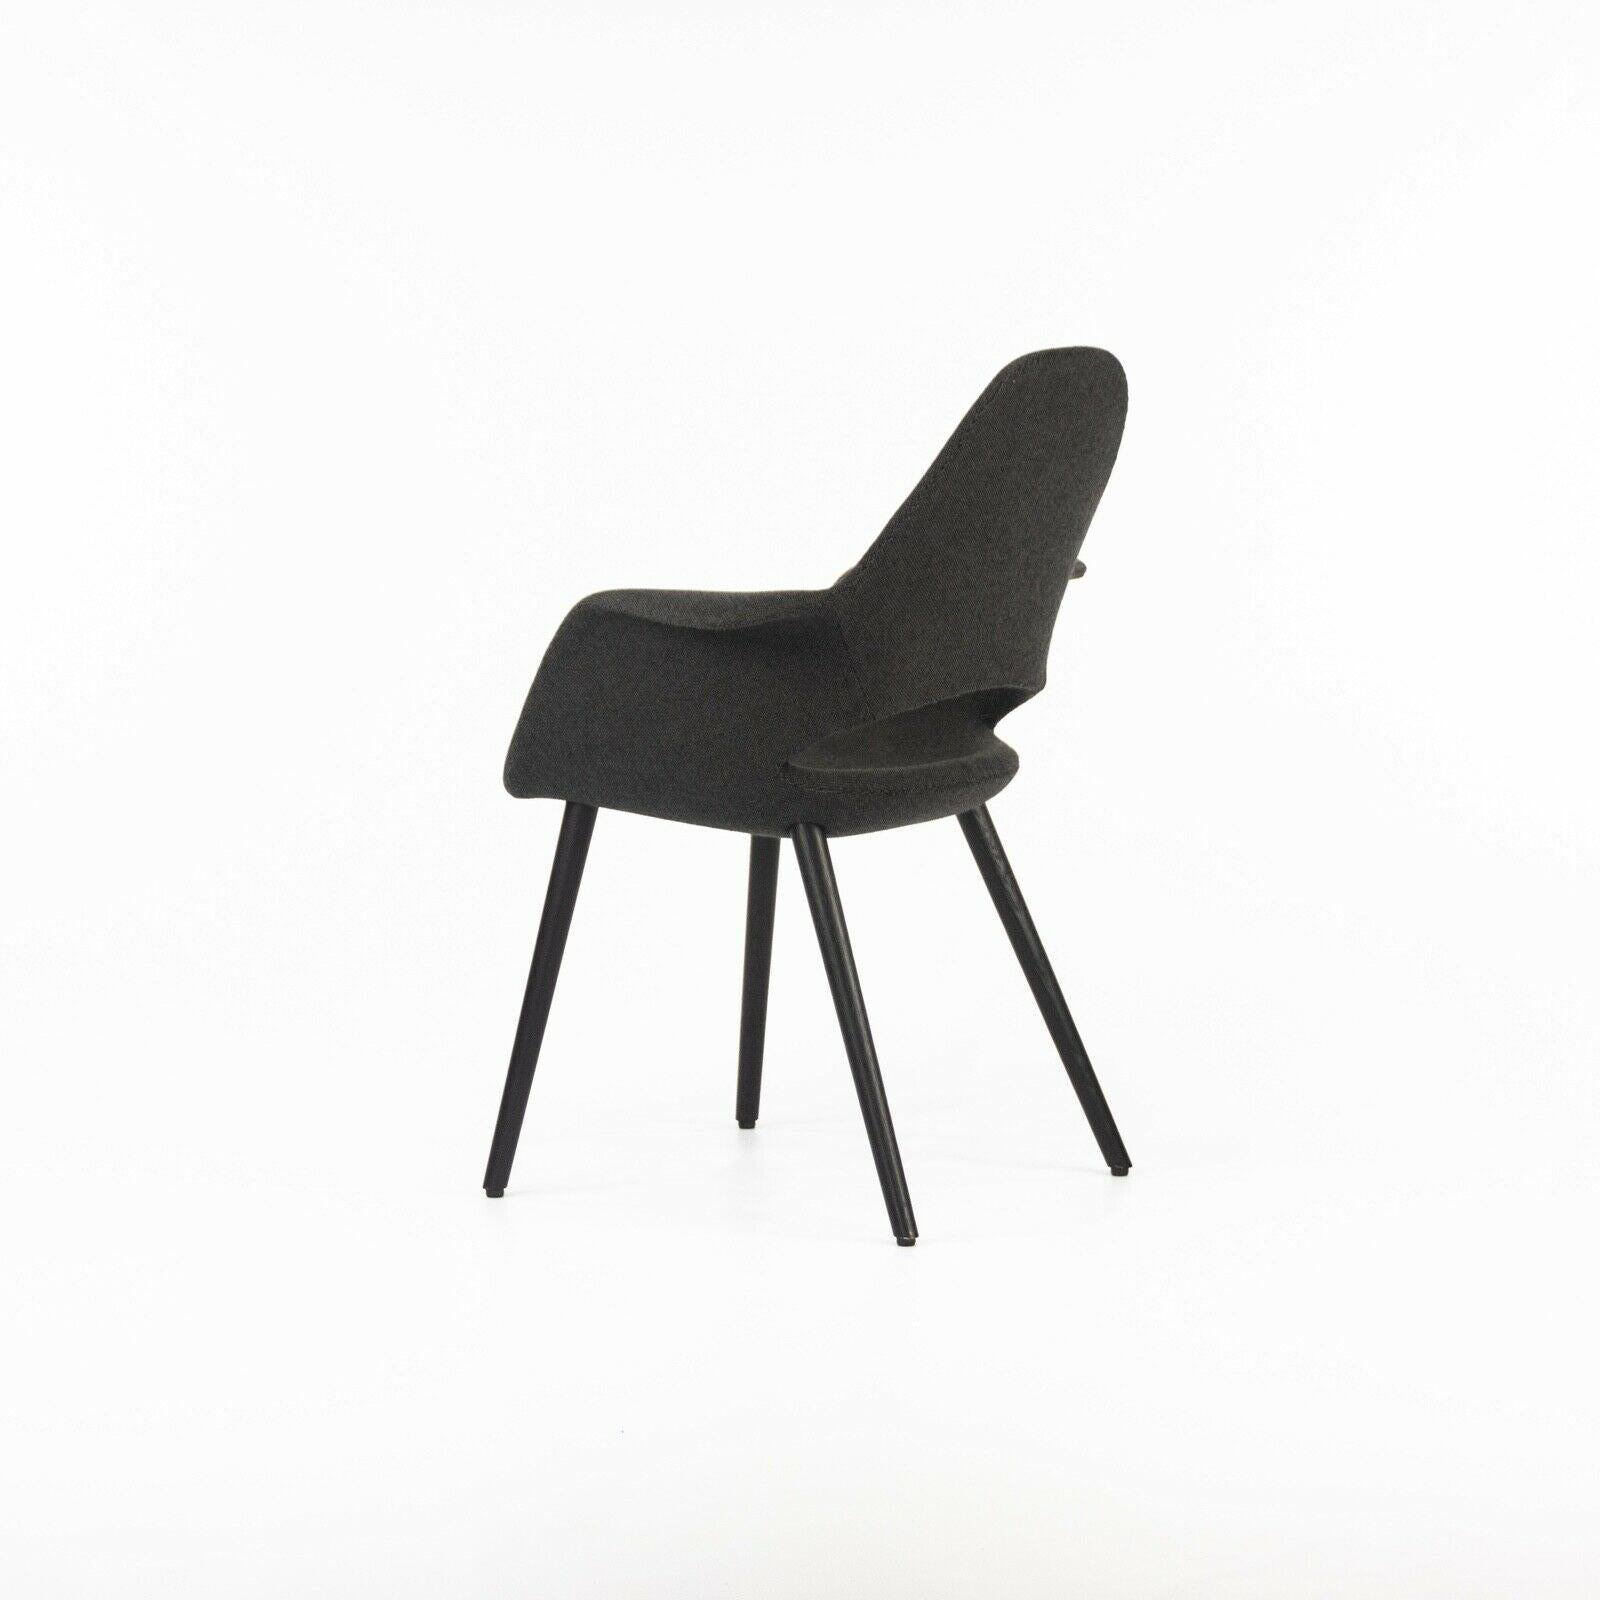 Metal 2010s Charles Eames & Eero Saarinen Organic Chairs by Vitra in Dark Gray Fabric For Sale